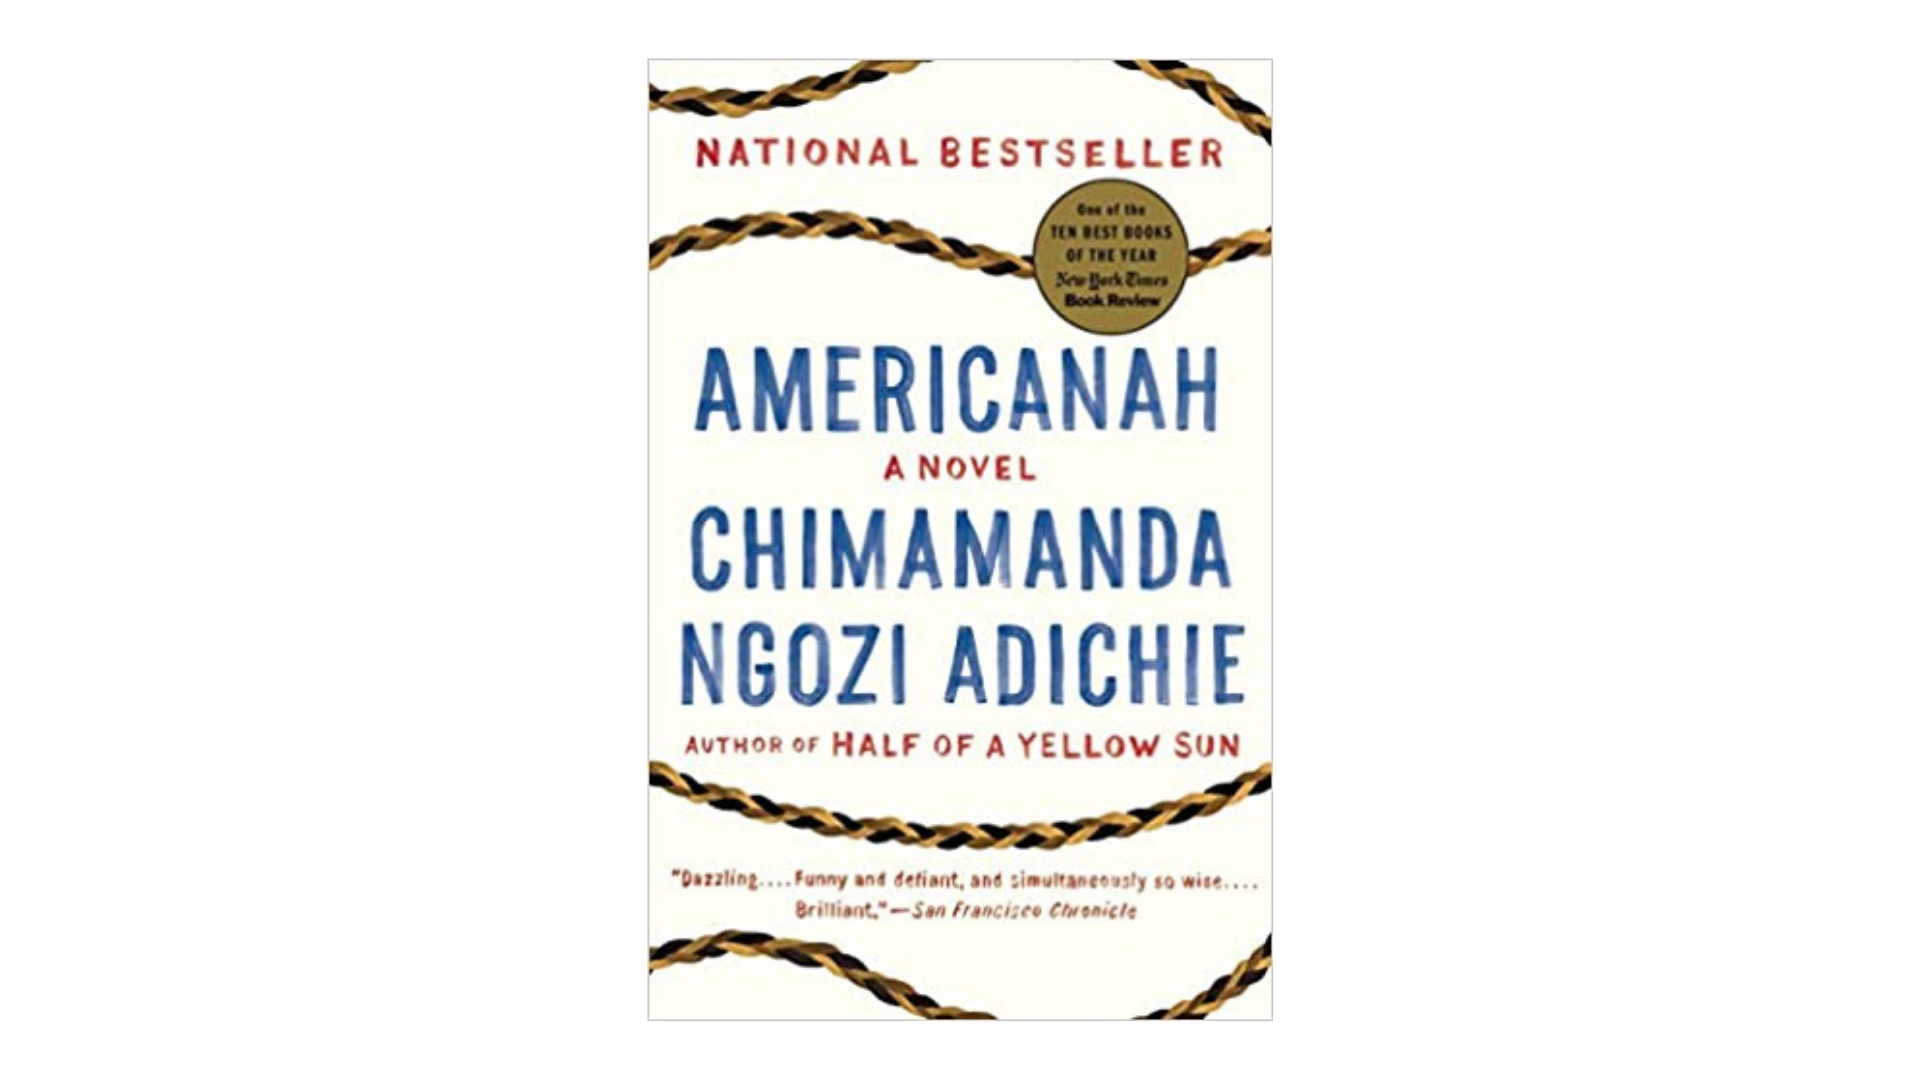 Chimamanda best books by black authors